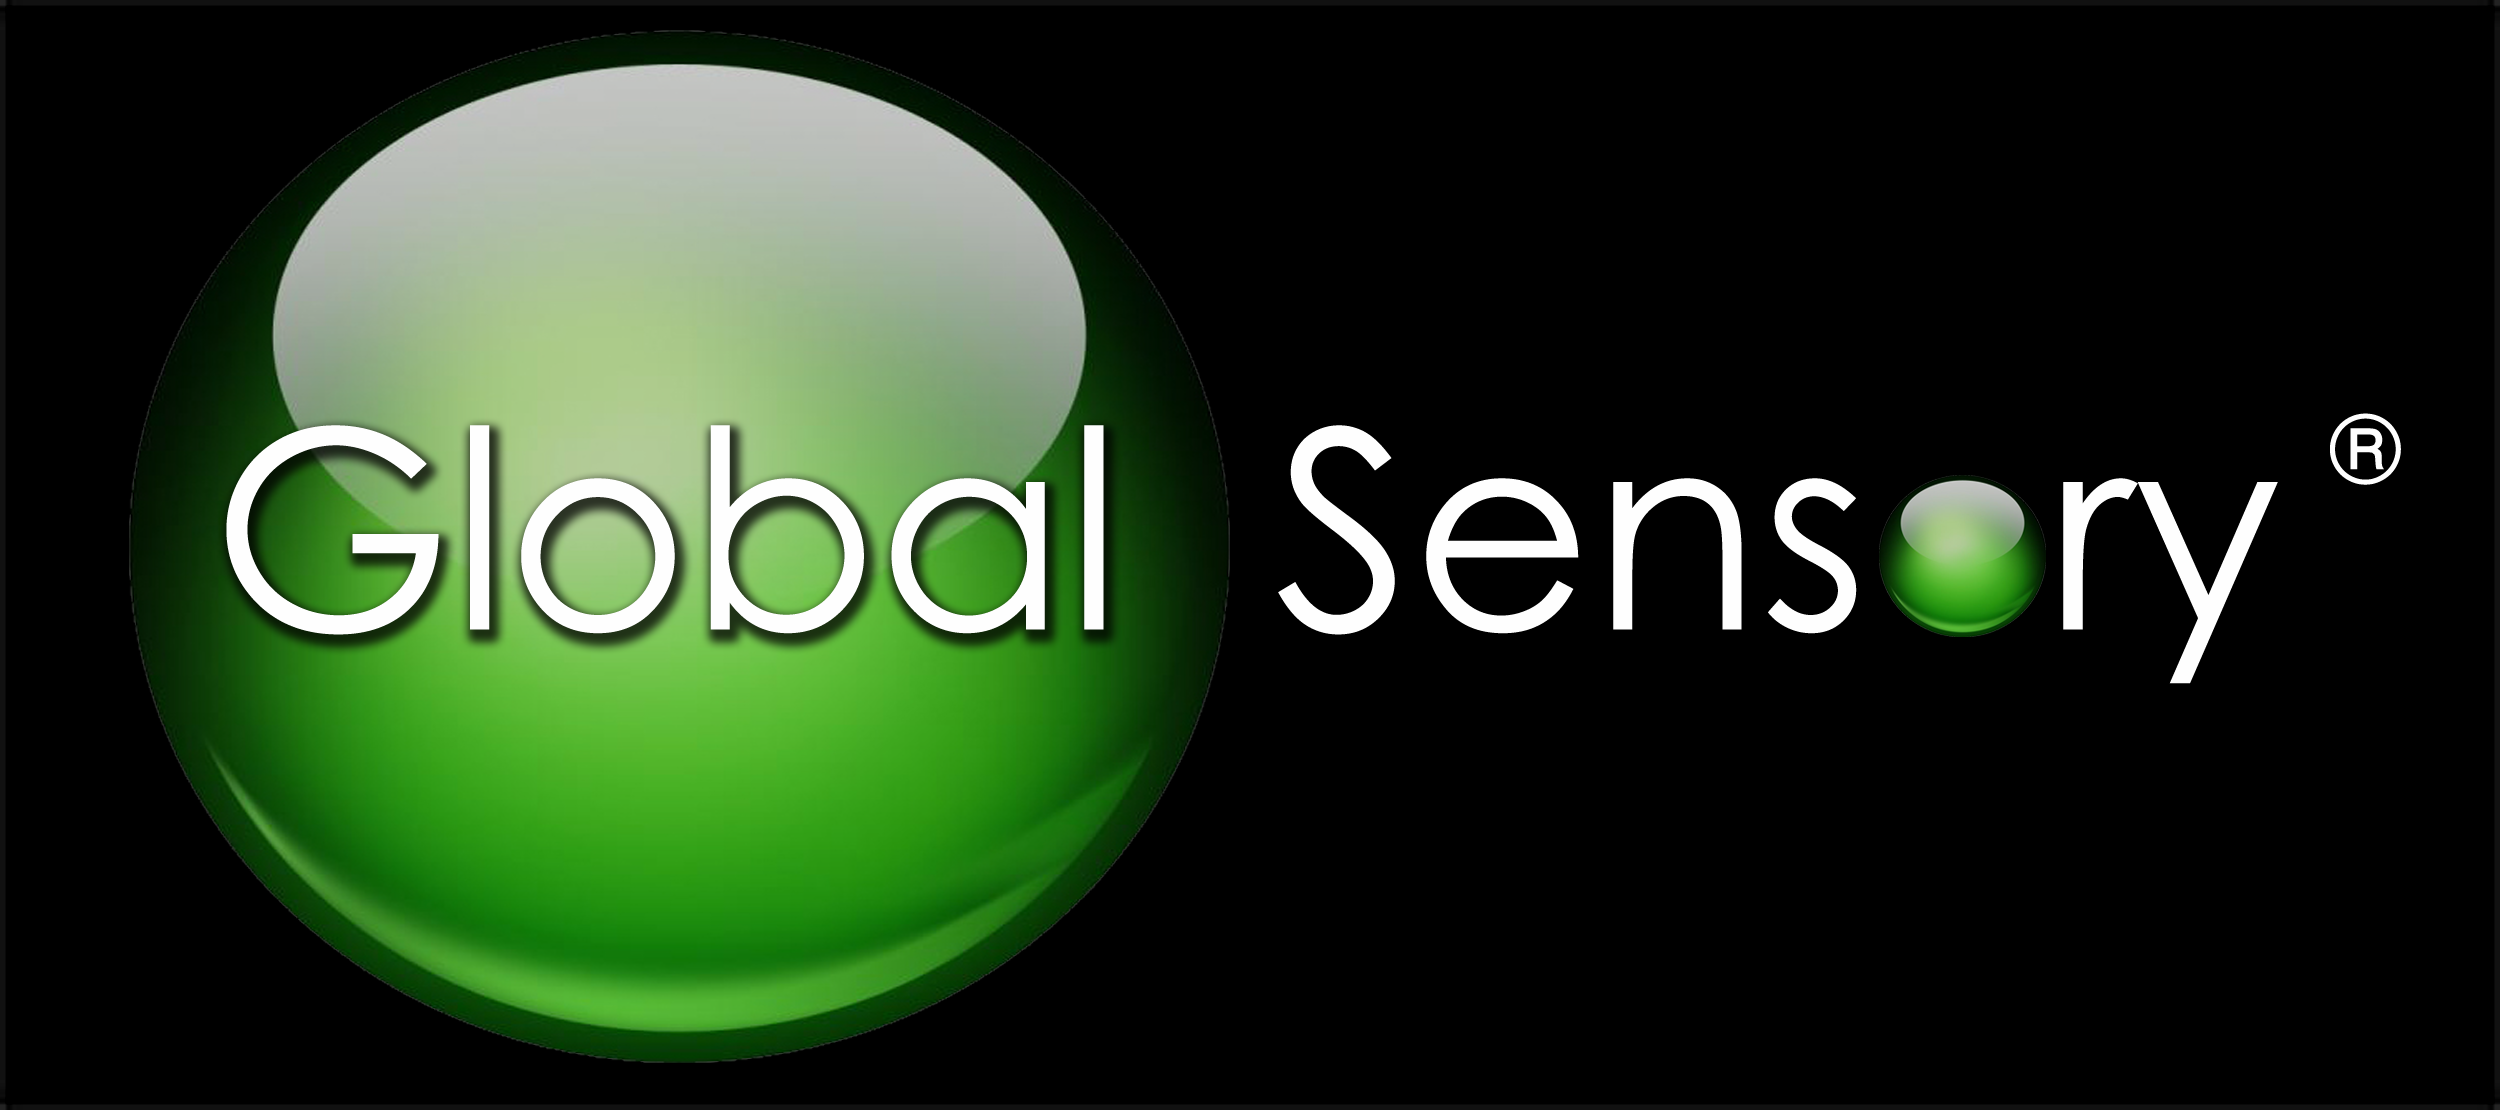 Global Sensory